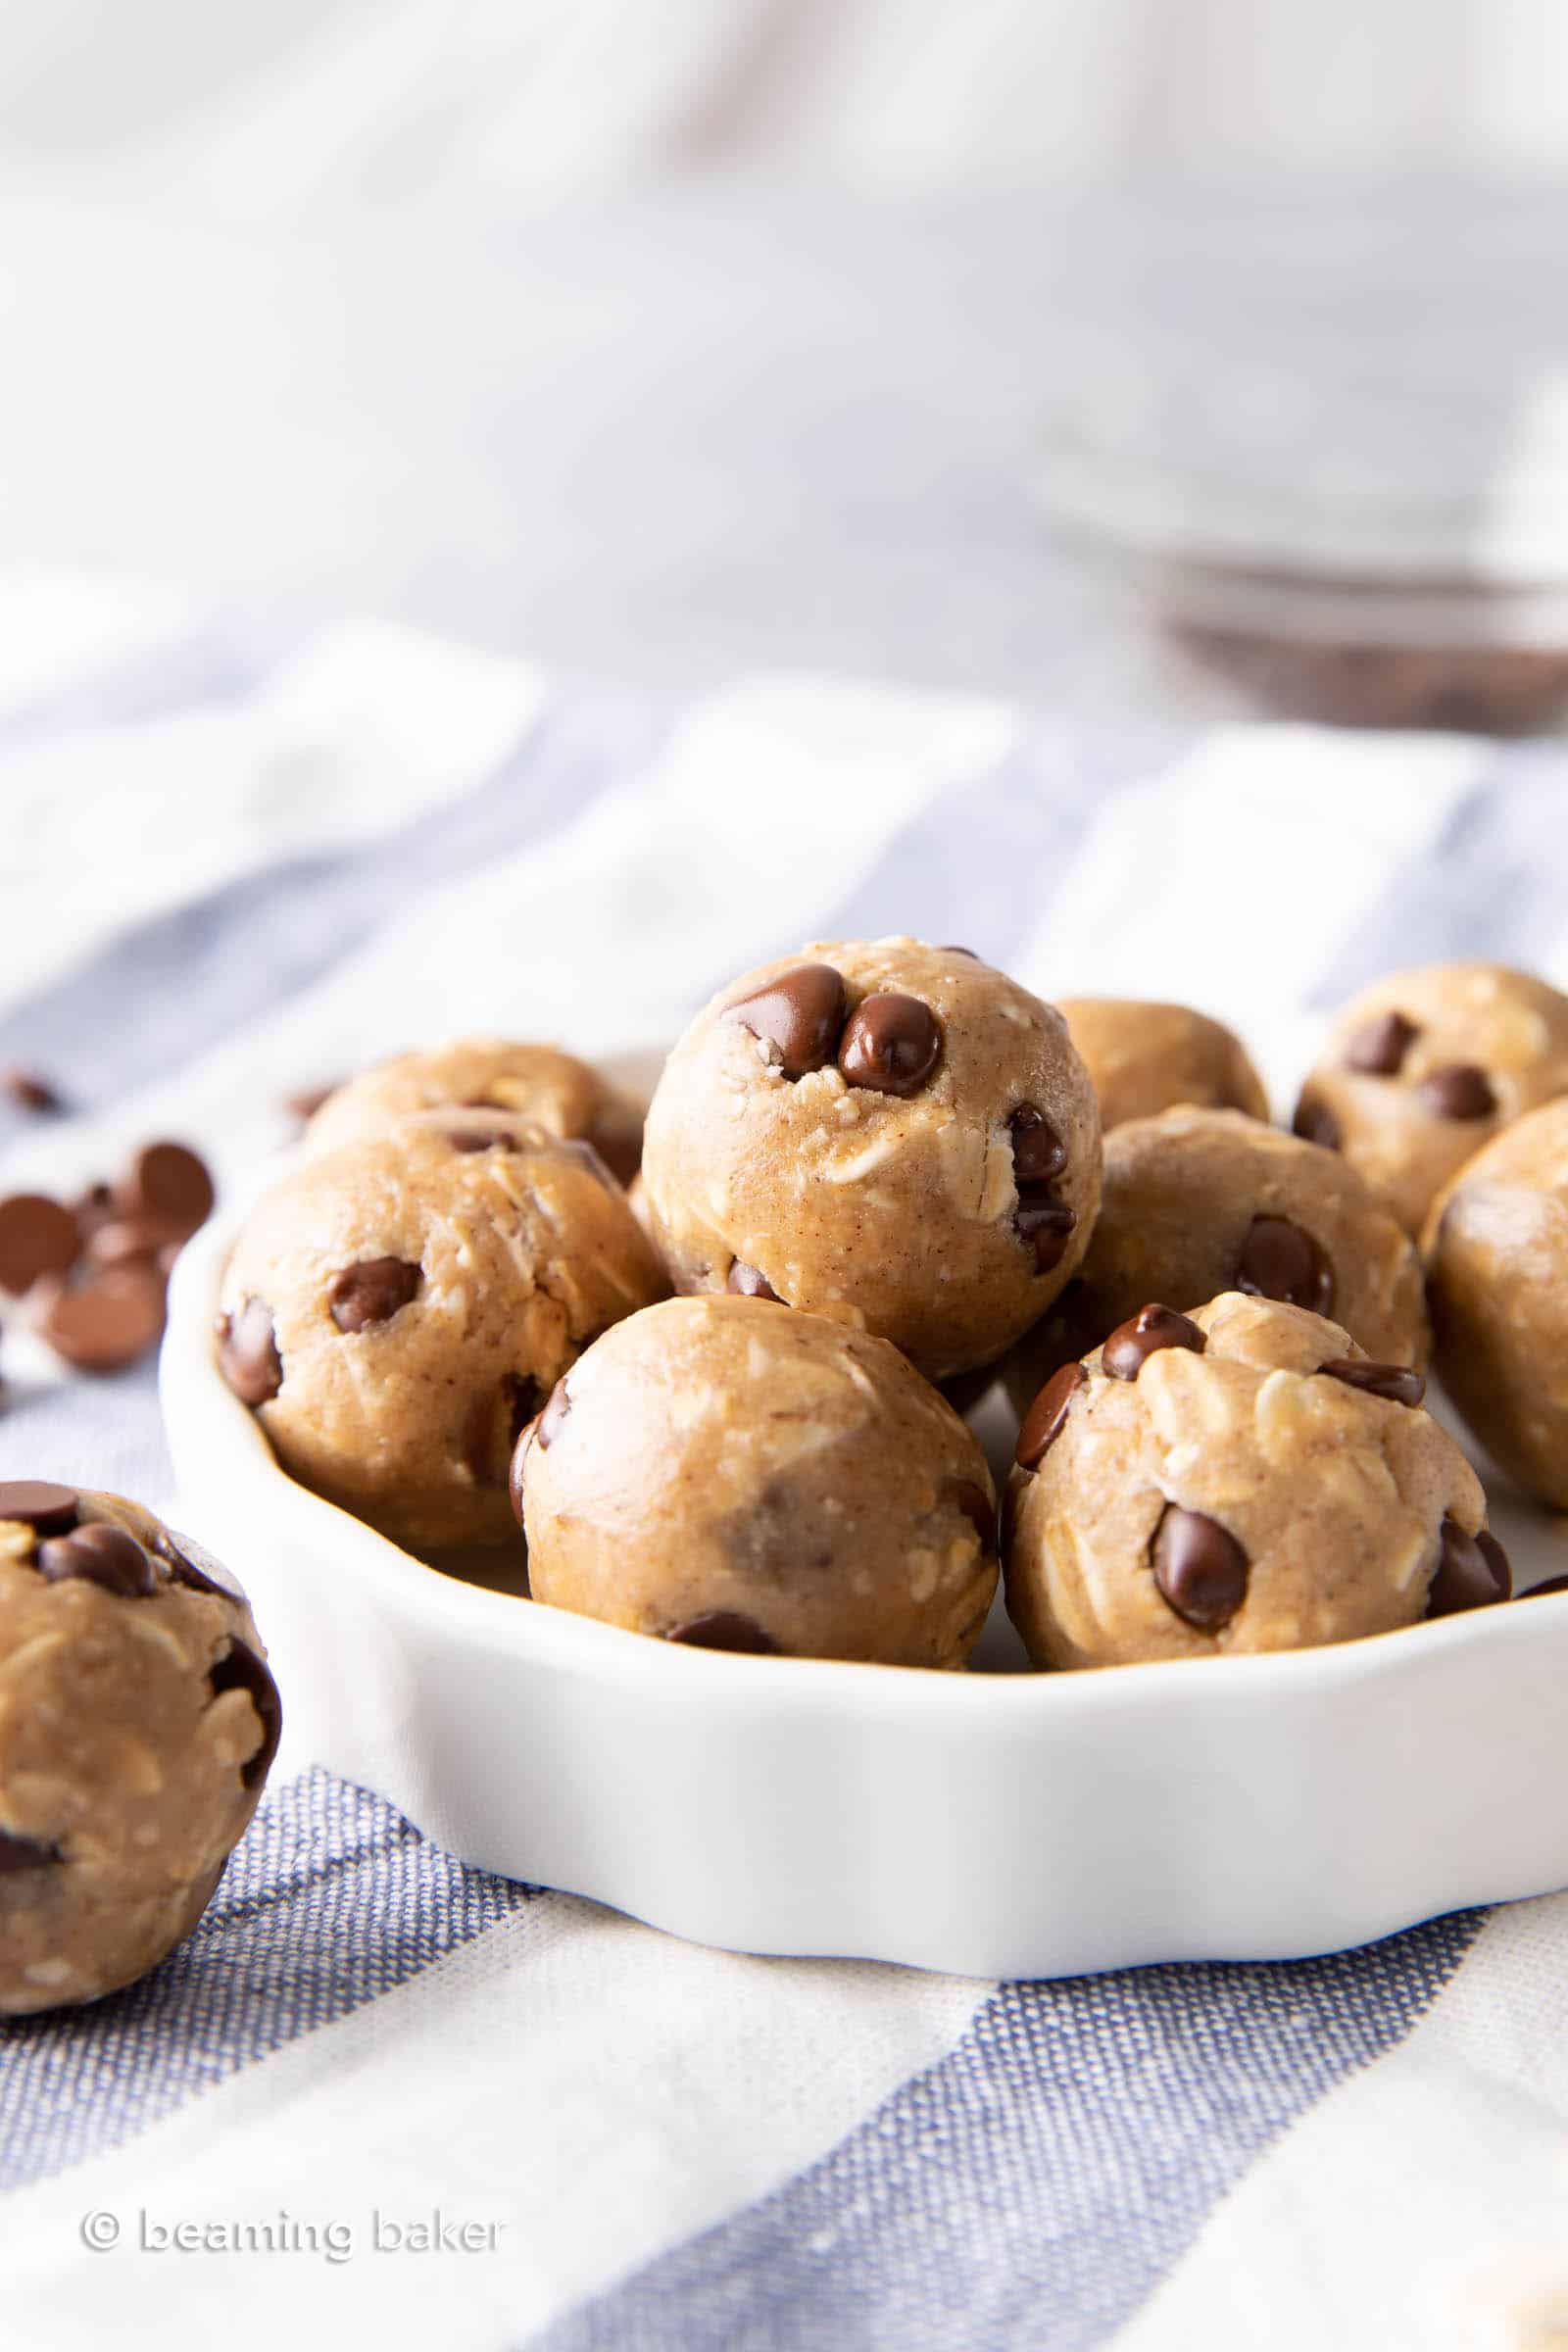 Oatmeal Cookie Energy Balls Recipe: a 5 ingredient recipe for healthy oatmeal energy balls packed with nutrients! Easy to make, Vegan, Gluten Free, Refined Sugar-Free. #EnergyBalls #Vegan #GlutenFree #Healthy | Recipe at BeamingBaker.com